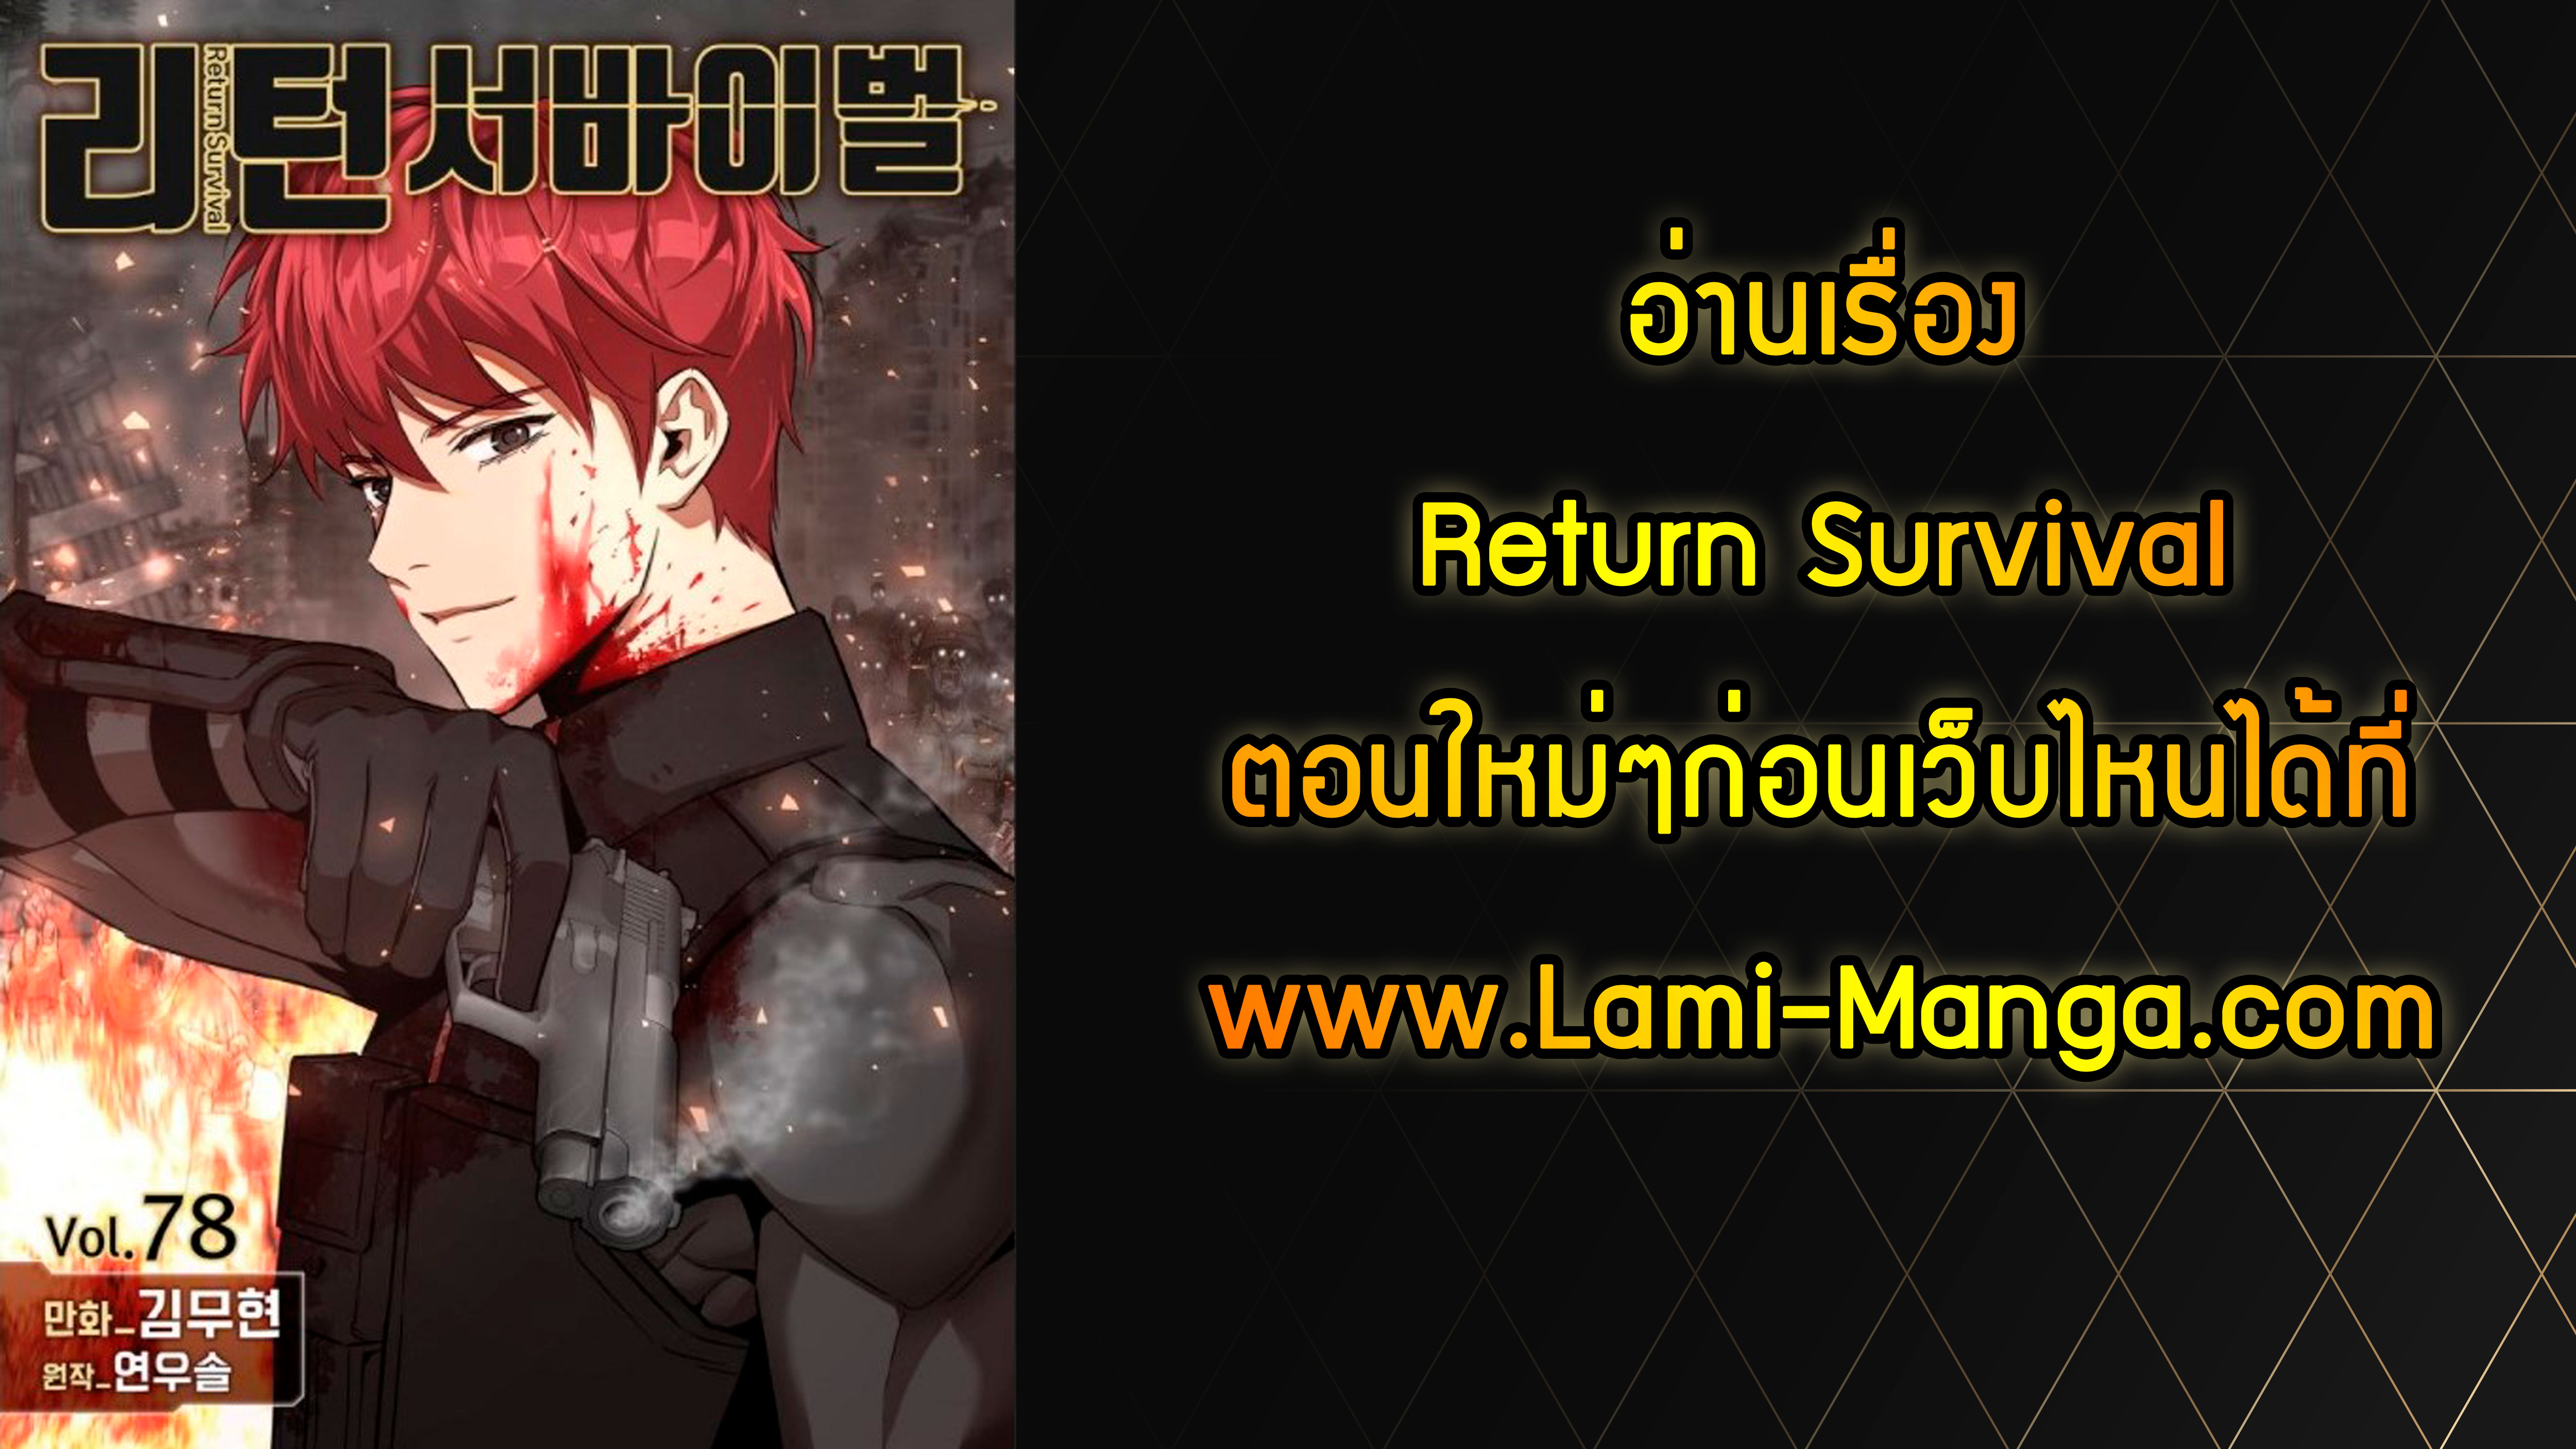 Return Survival 61 (9)